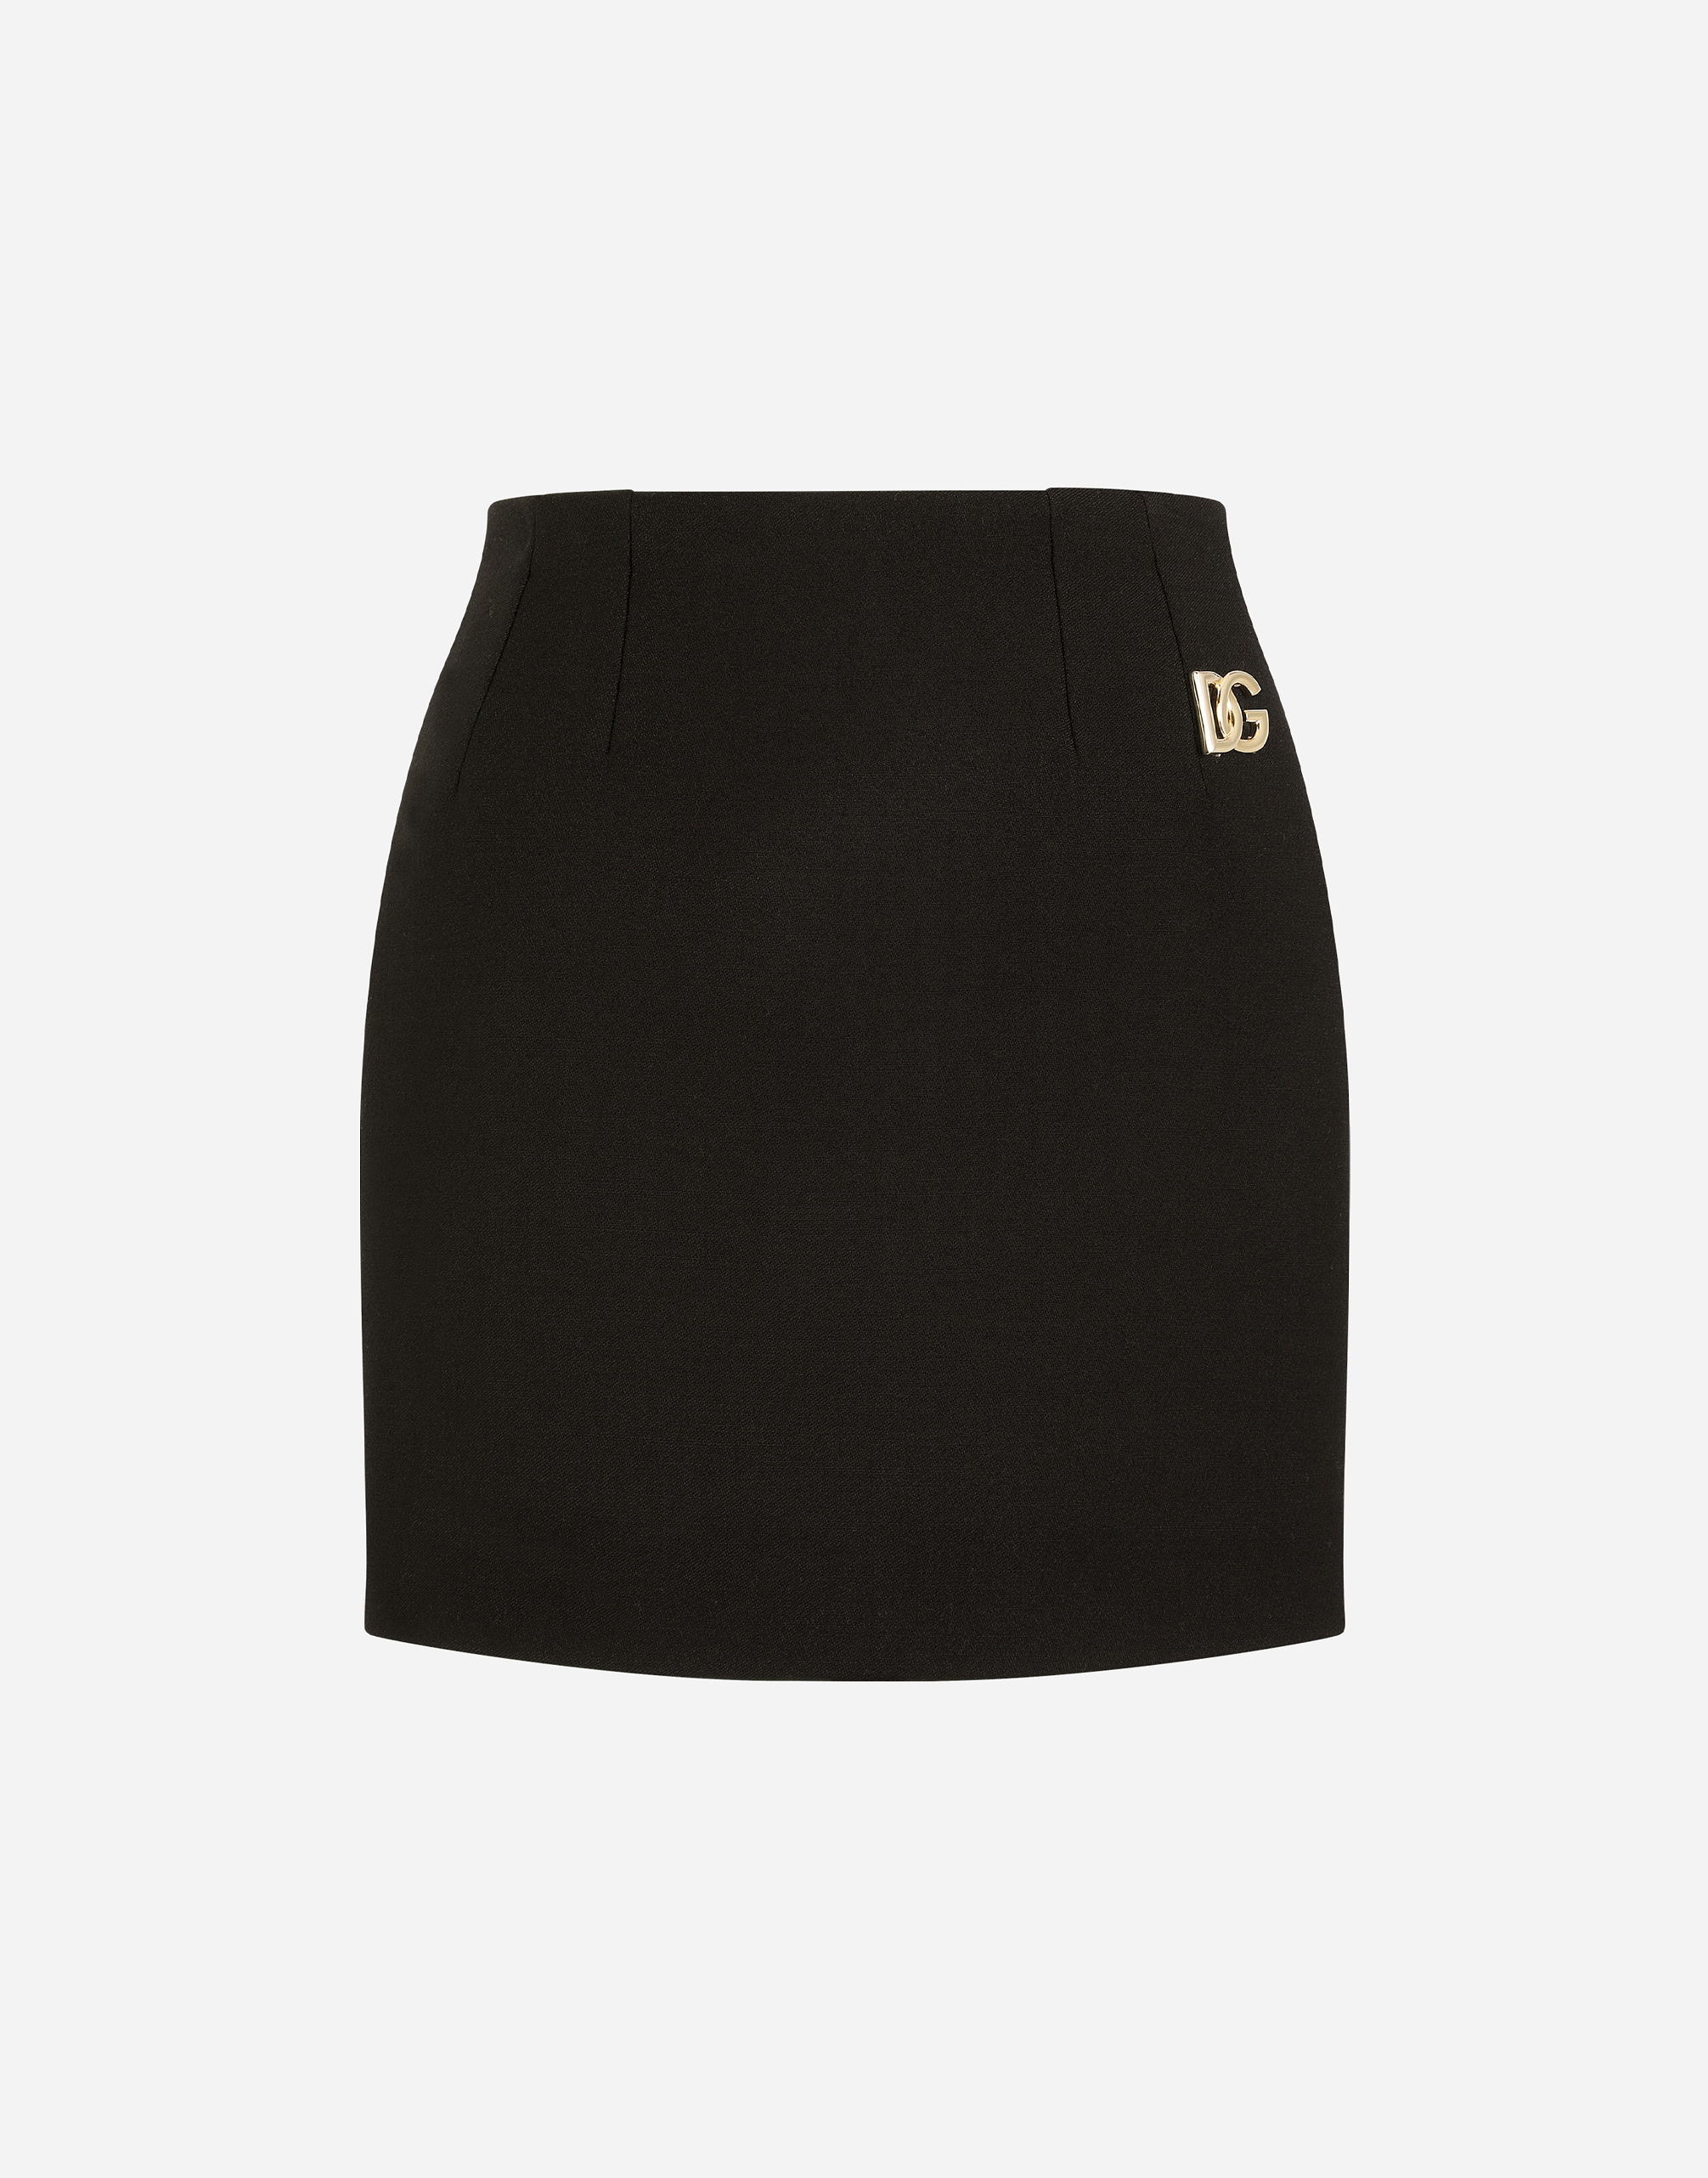 Double crepe miniskirt with DG embellishment in Black